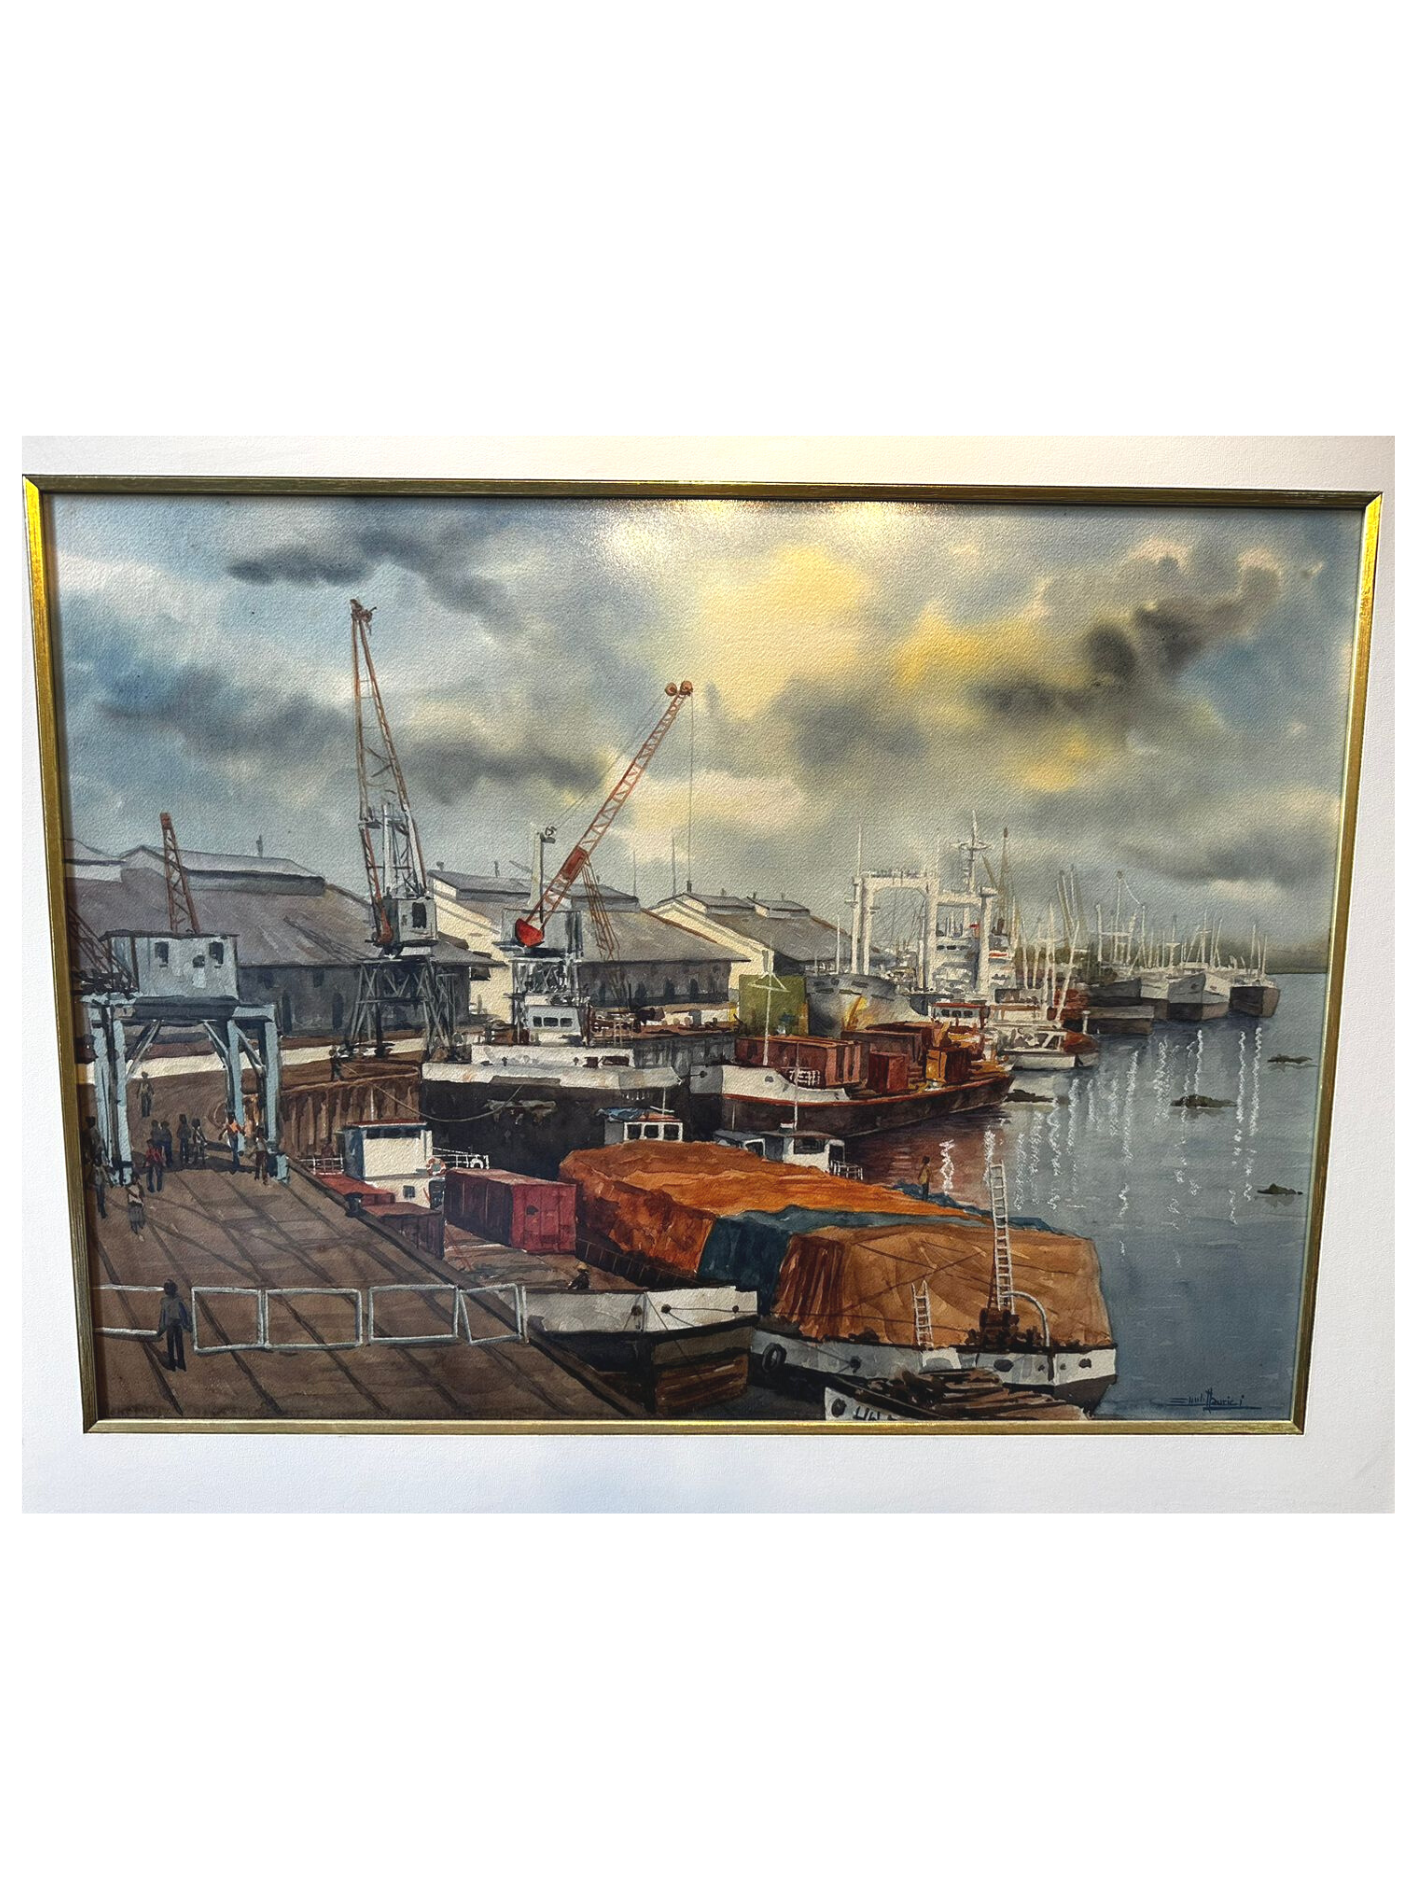 Cuadro "El Puerto" de Emilli Aparici 72 x 53 cm